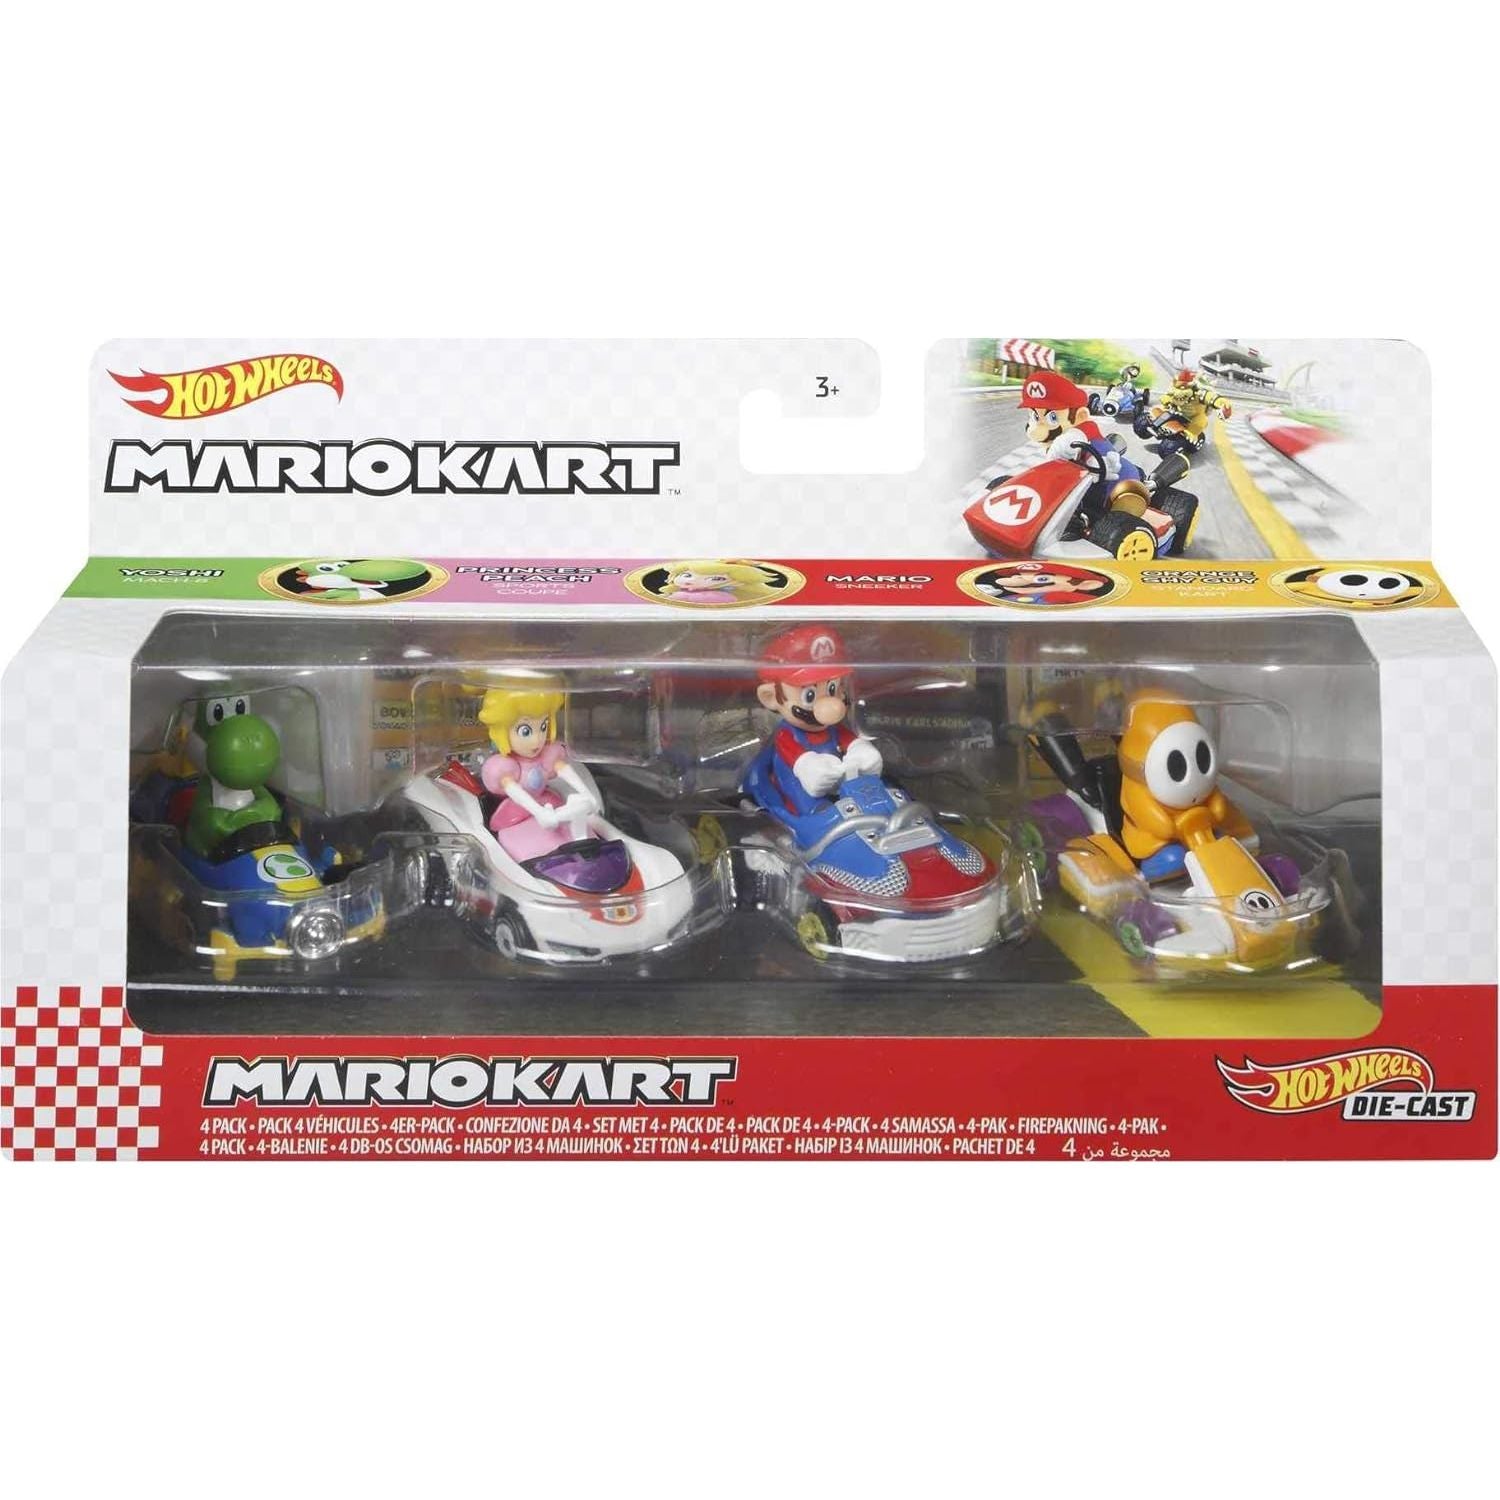 Hot Wheels Mario Kart Vehicle 4-Pack, Set of 4 Fan-Favorite Characters Includes 1 Exclusive Model